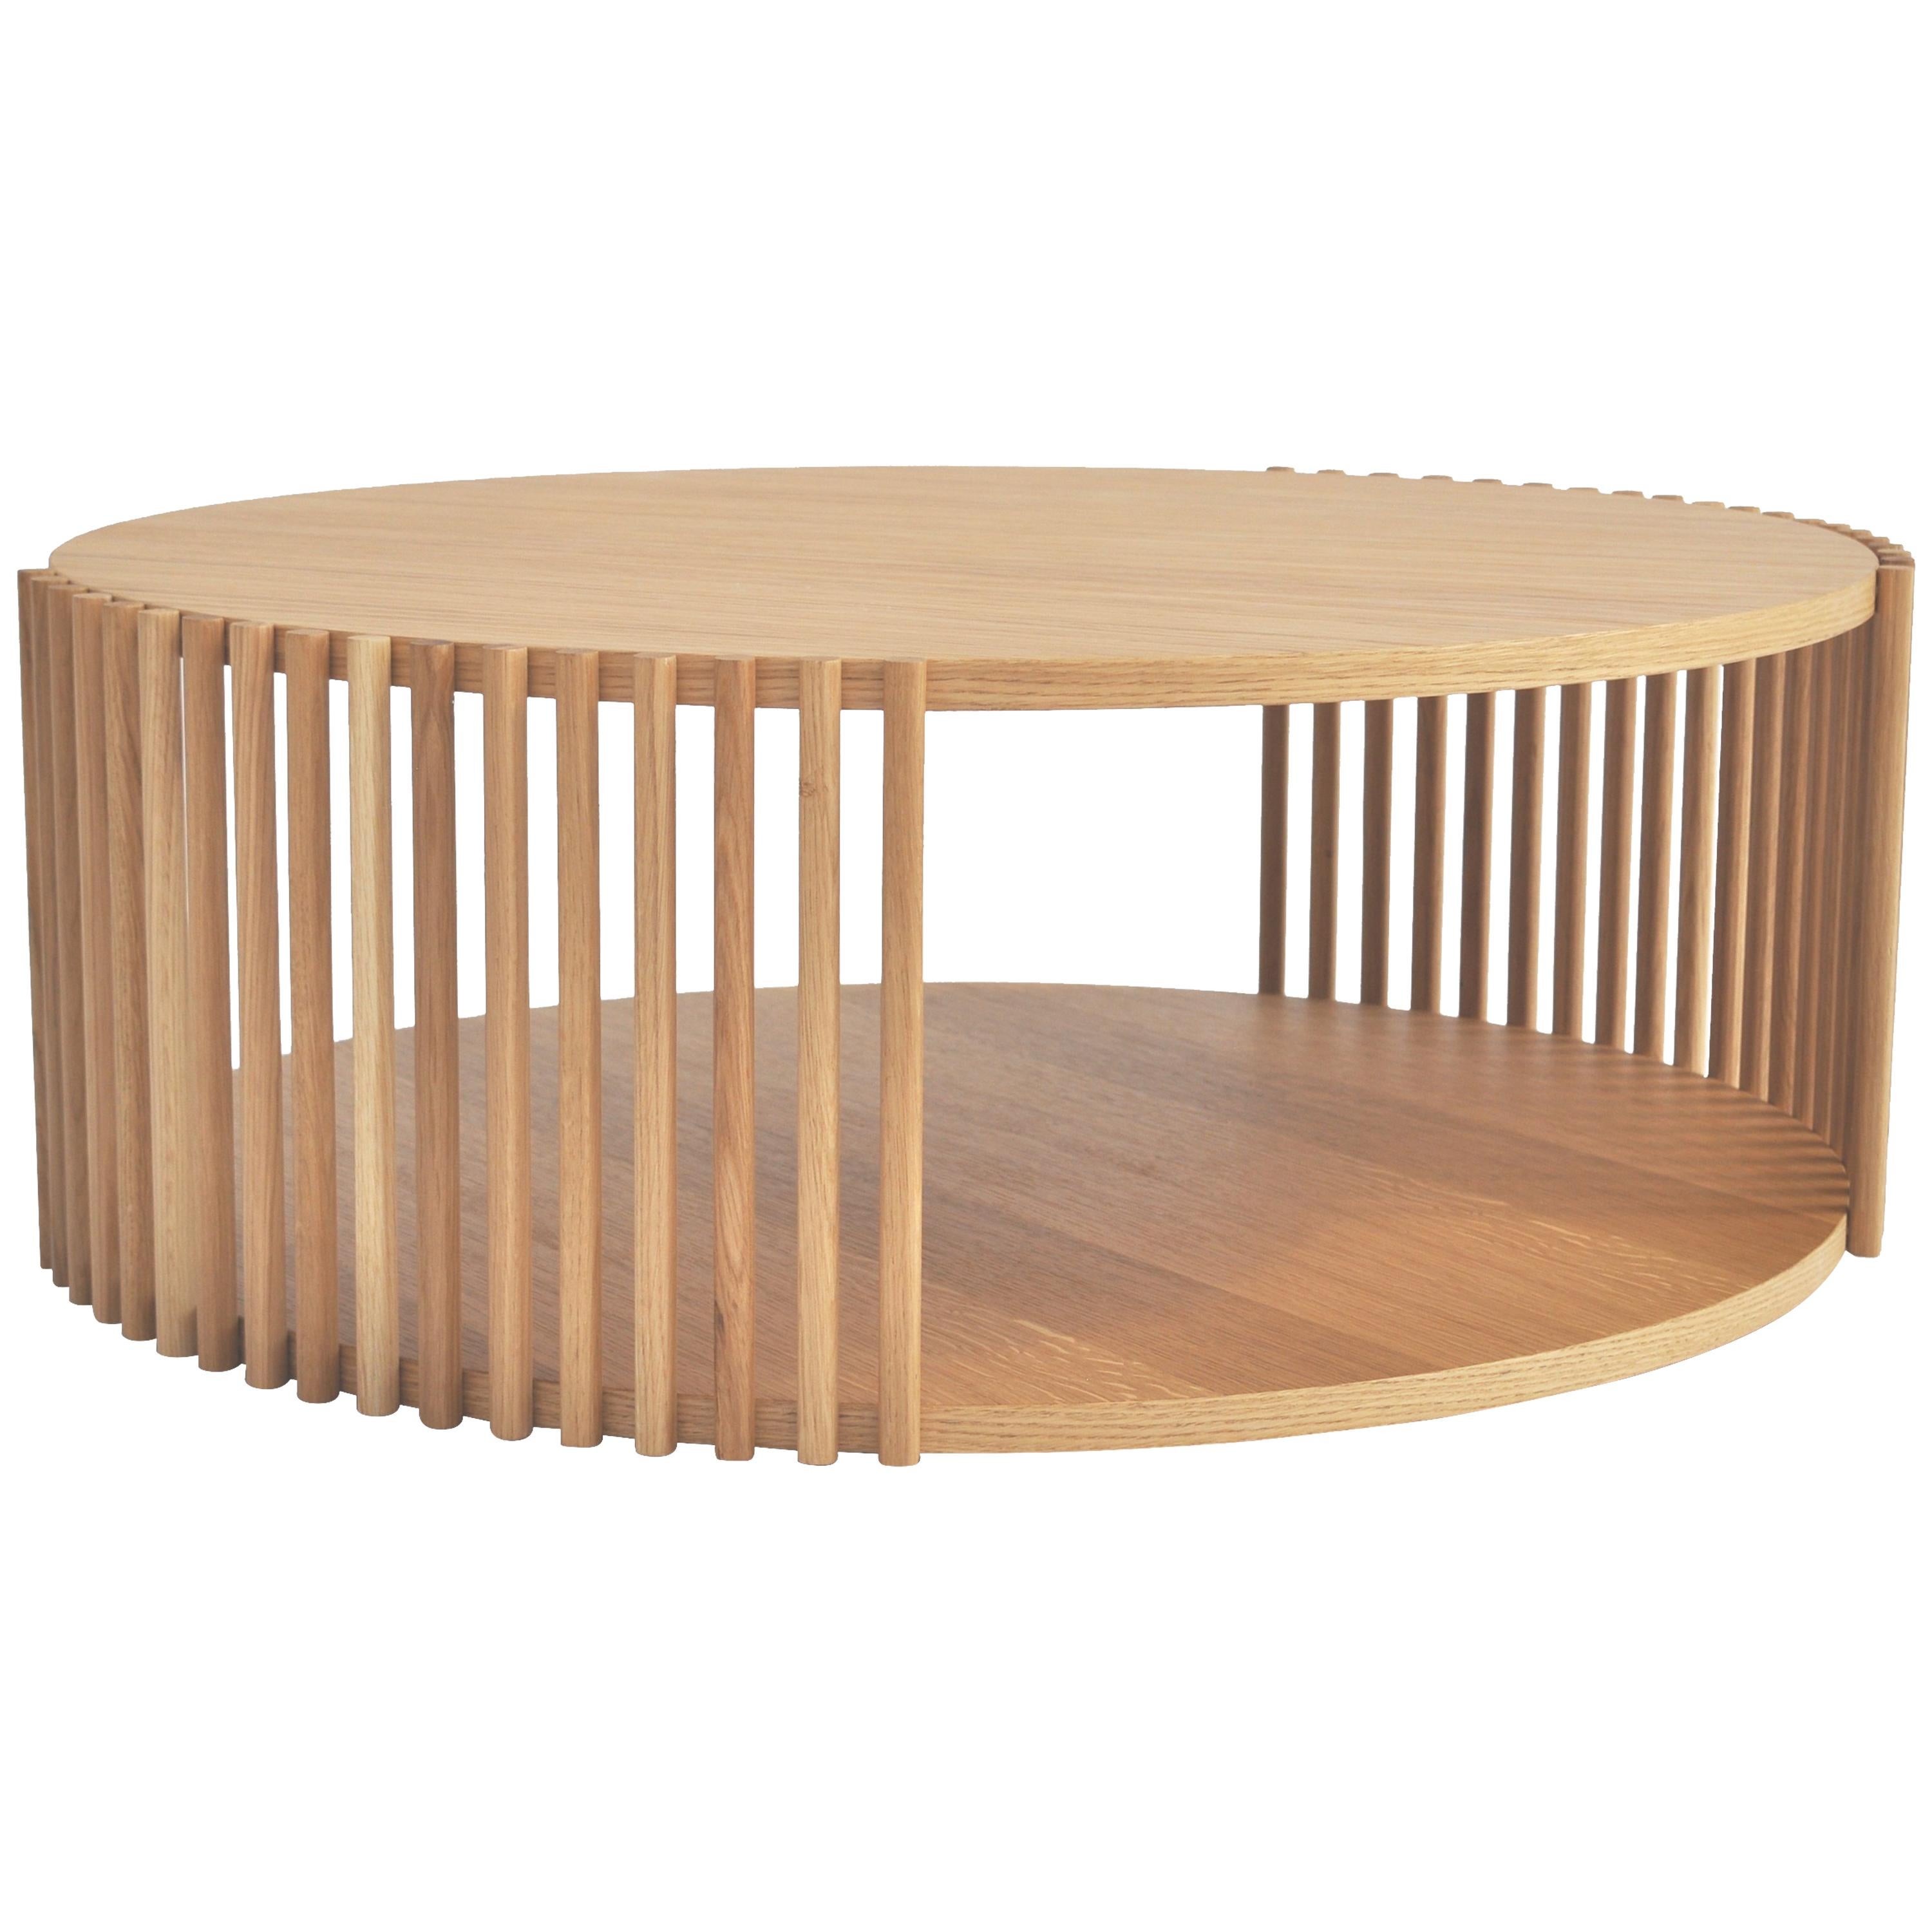 Central table, coffee table in oak wood -  by Debonademeo for Medulum